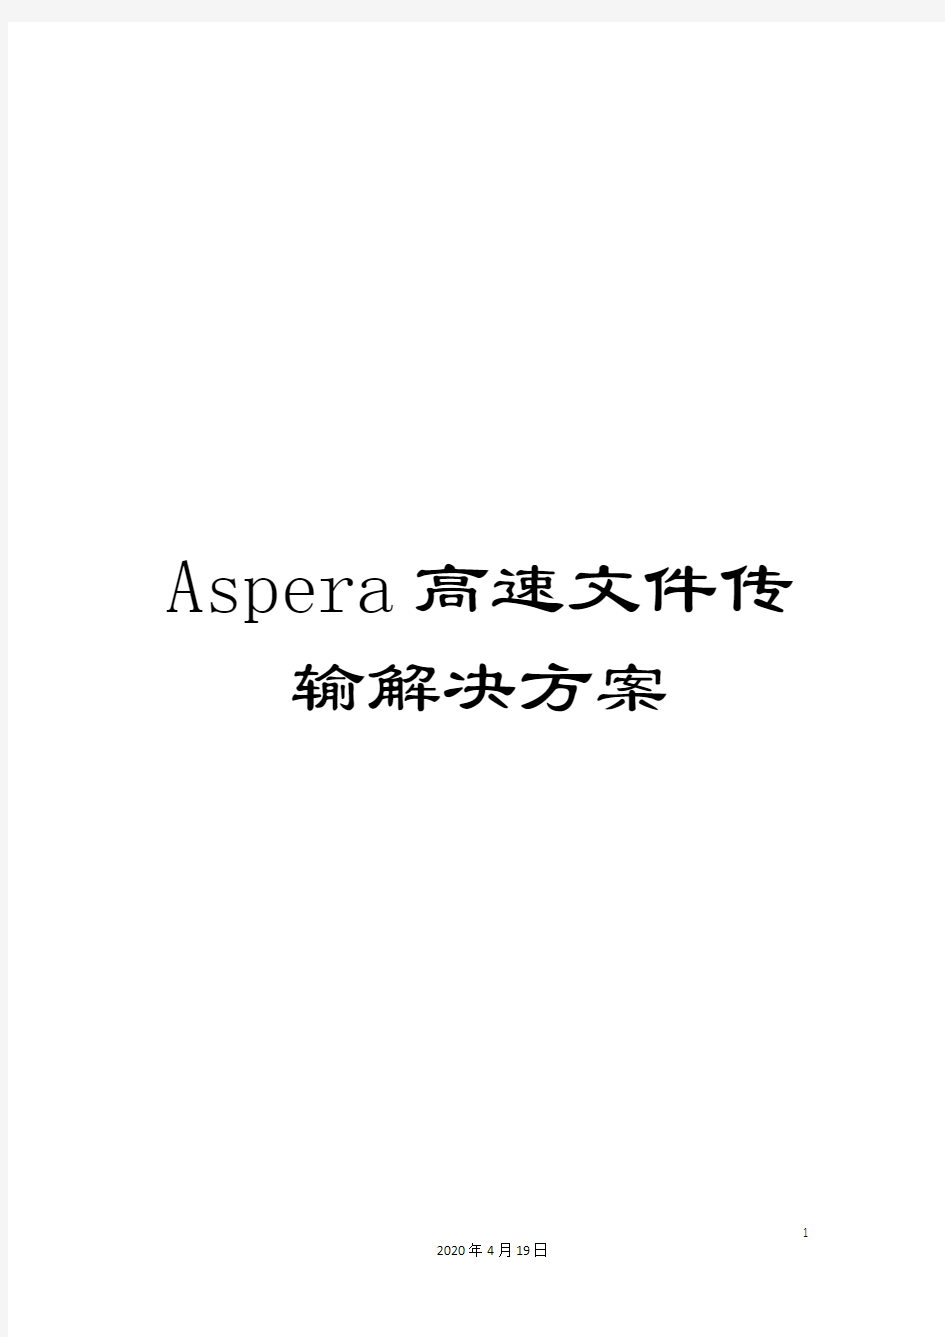 Aspera高速文件传输解决方案